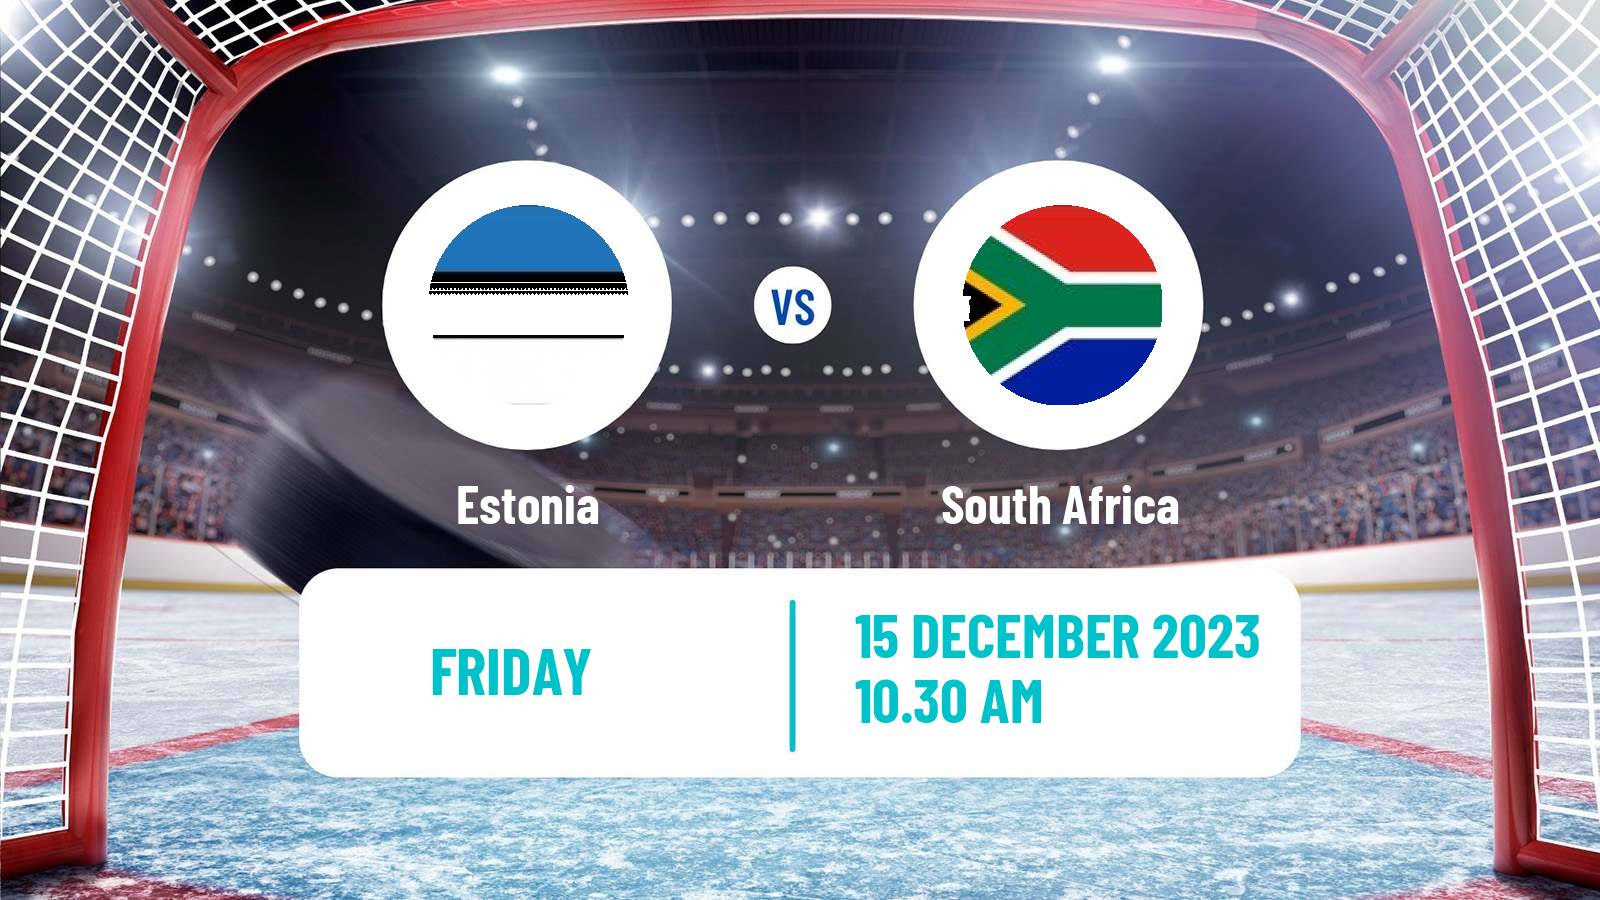 Hockey Winter Olympic Games - Ice Hockey Estonia - South Africa